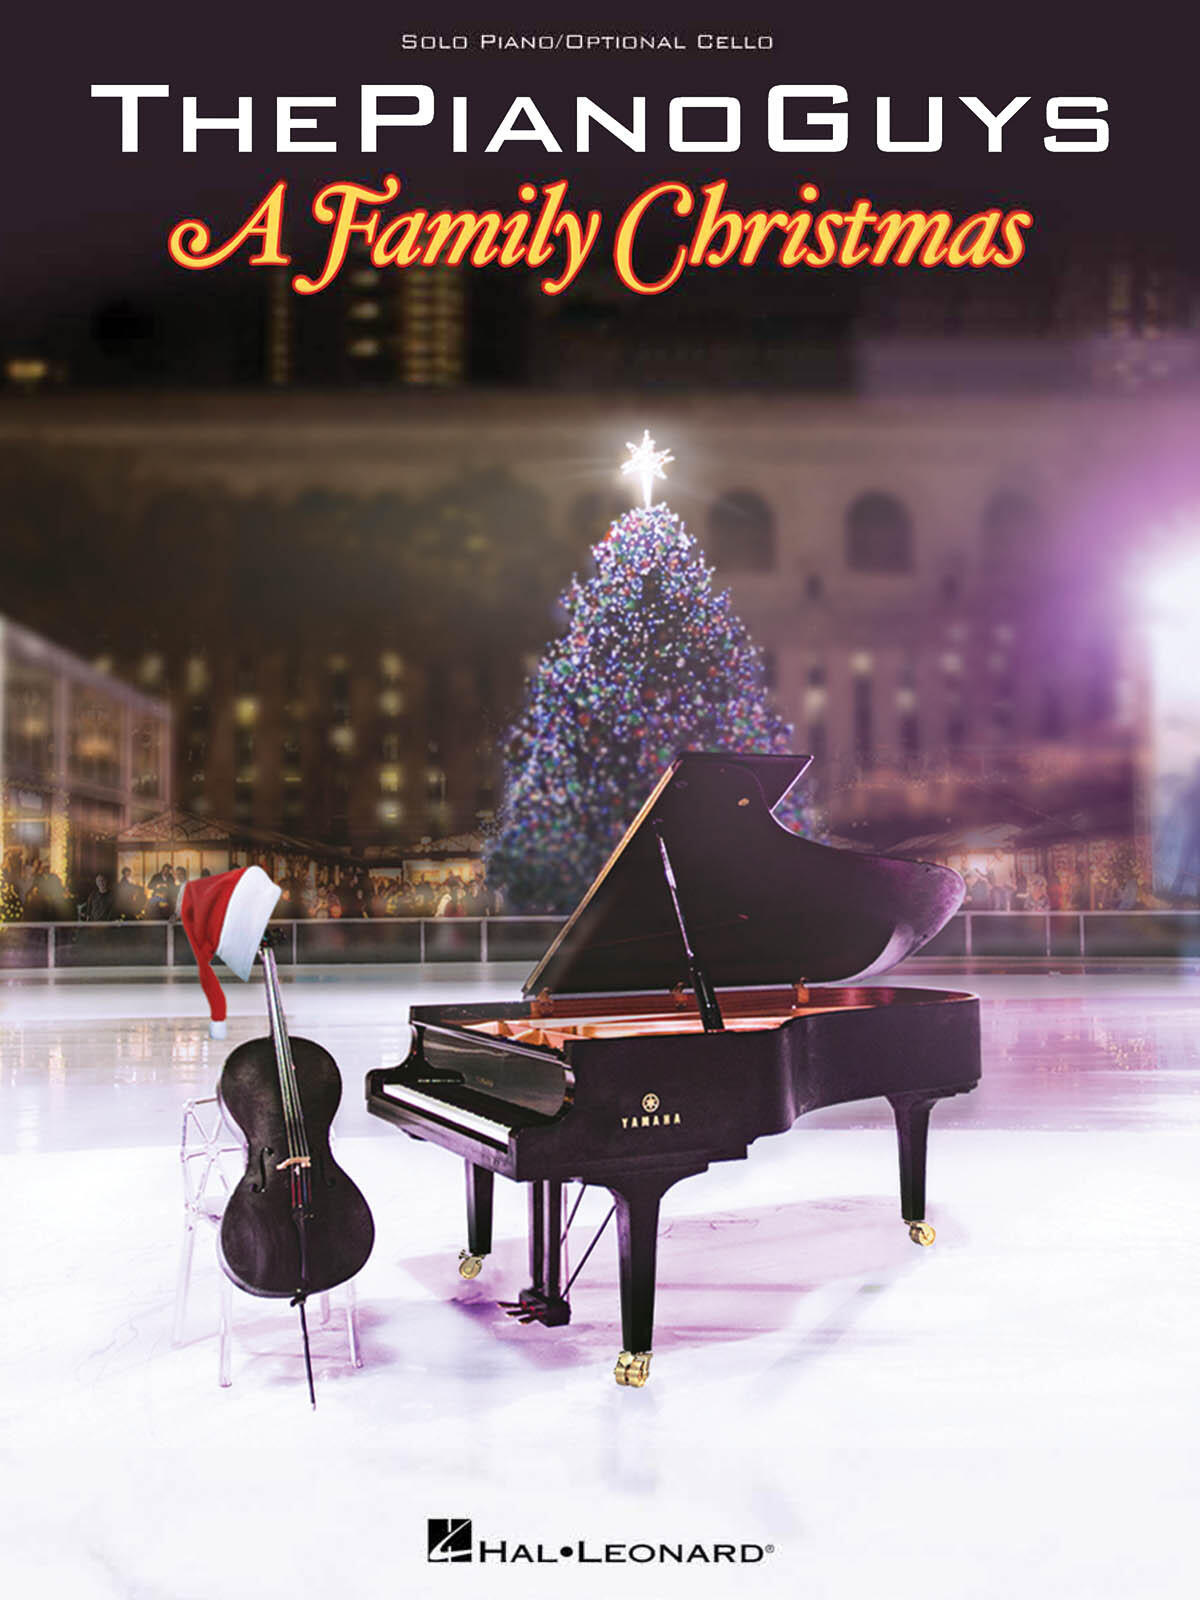 The Piano Guys  A Family Christmas : photo 1